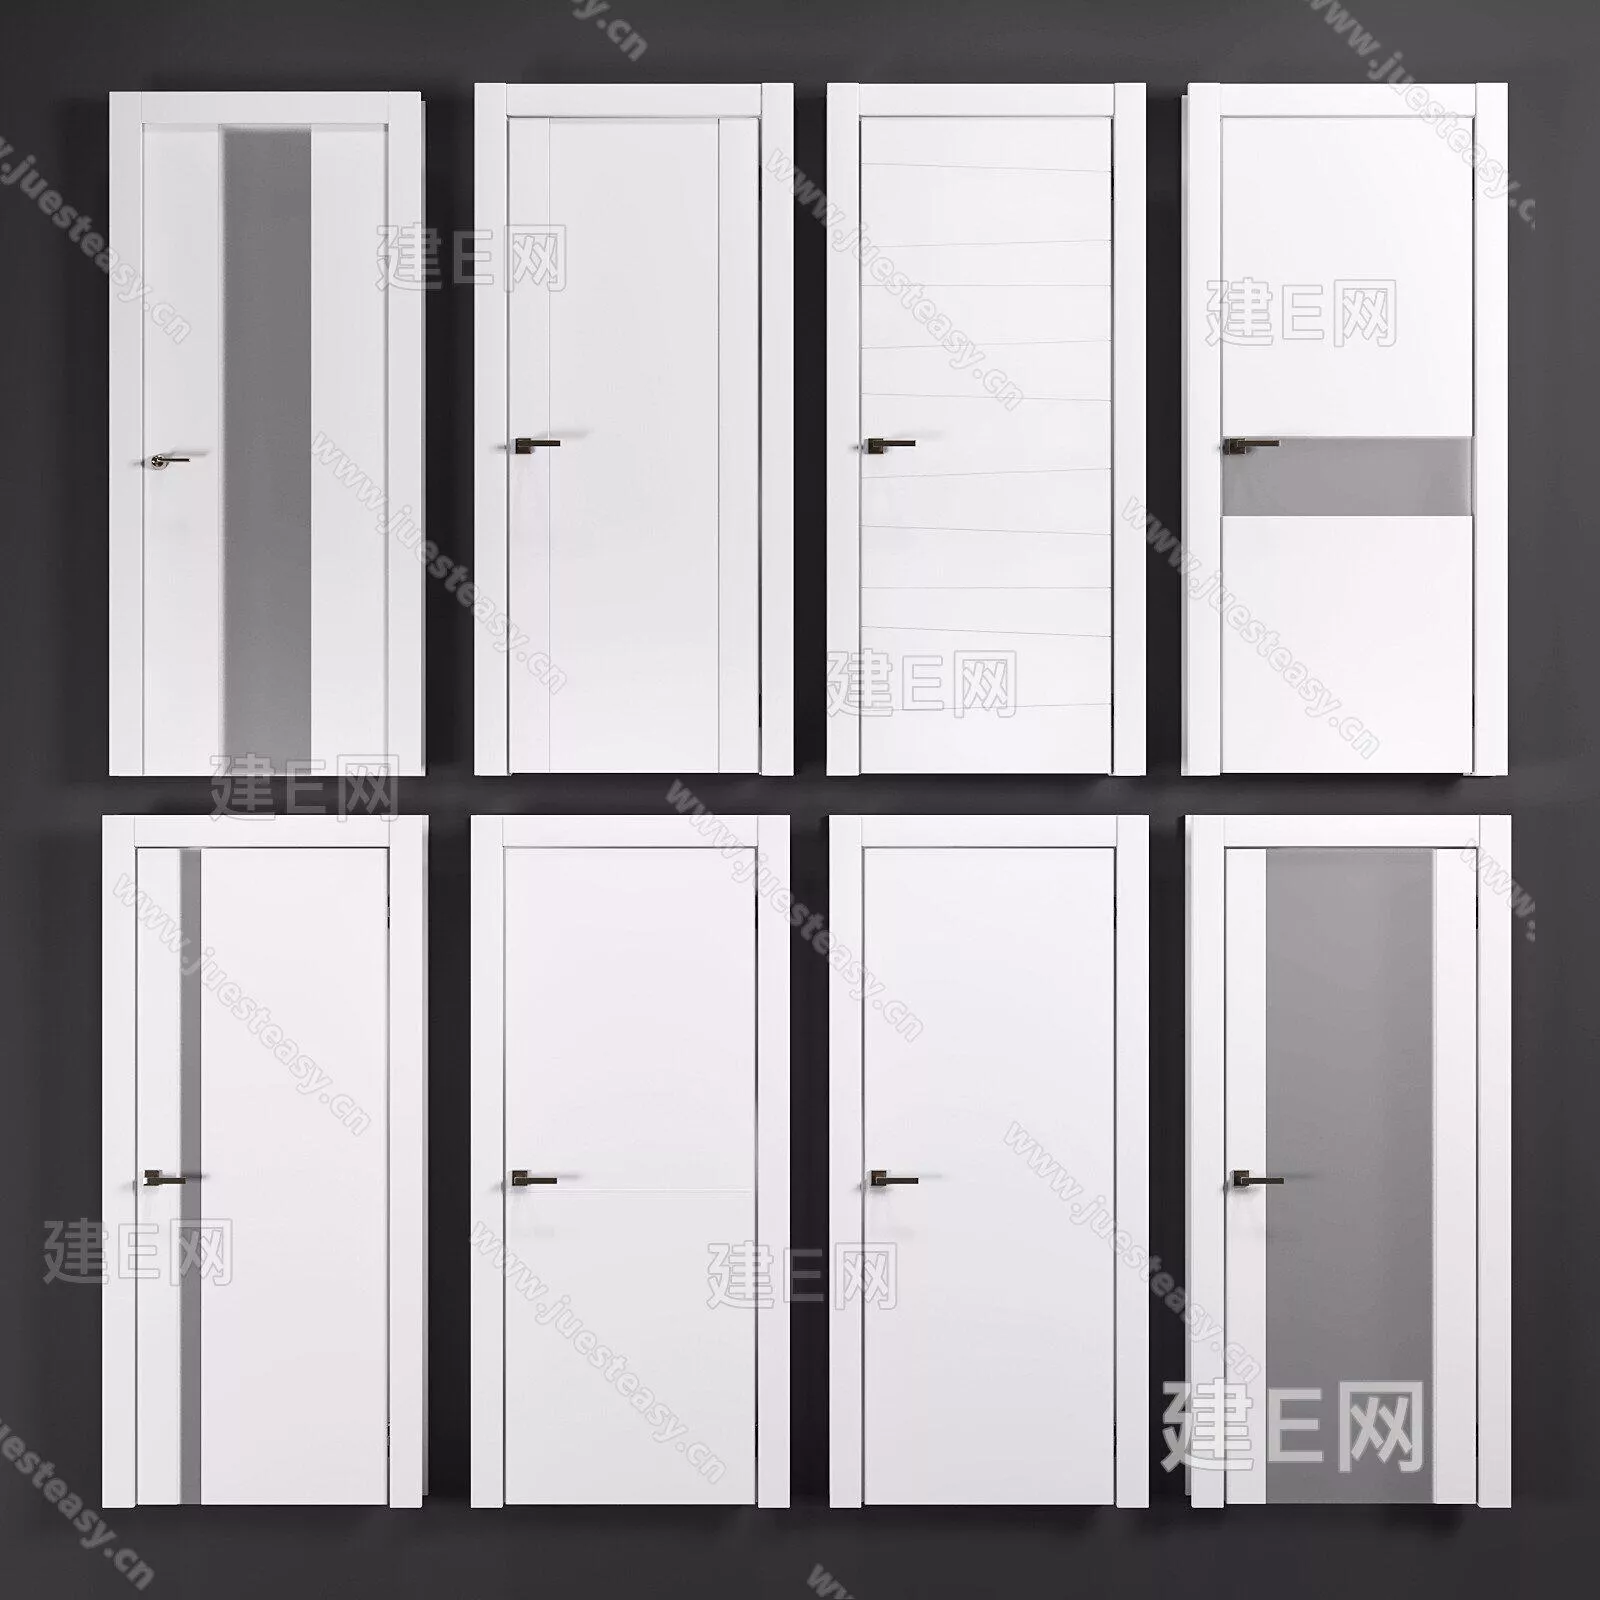 MODERN DOOR AND WINDOWS - SKETCHUP 3D MODEL - ENSCAPE - 111889837